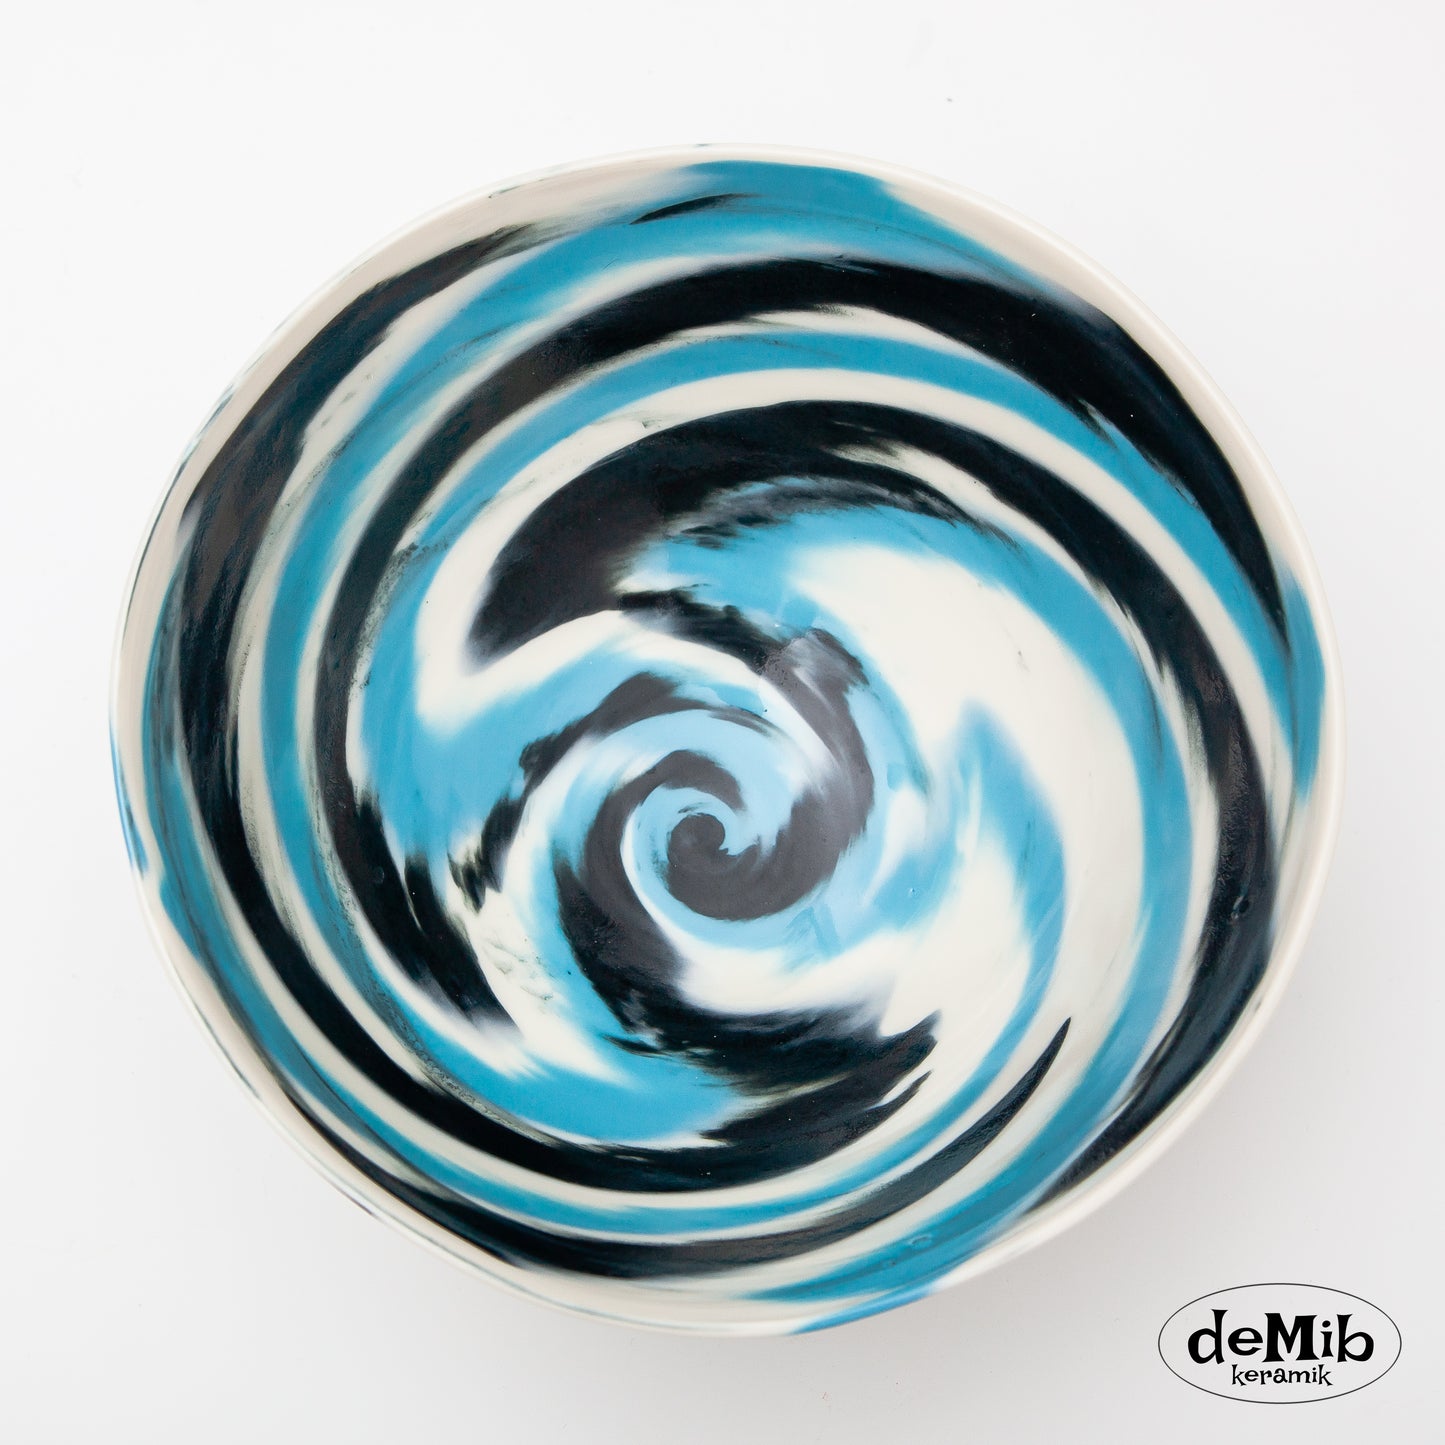 Agateware (Swirlware) Bowl in Blue & White (22 cm)